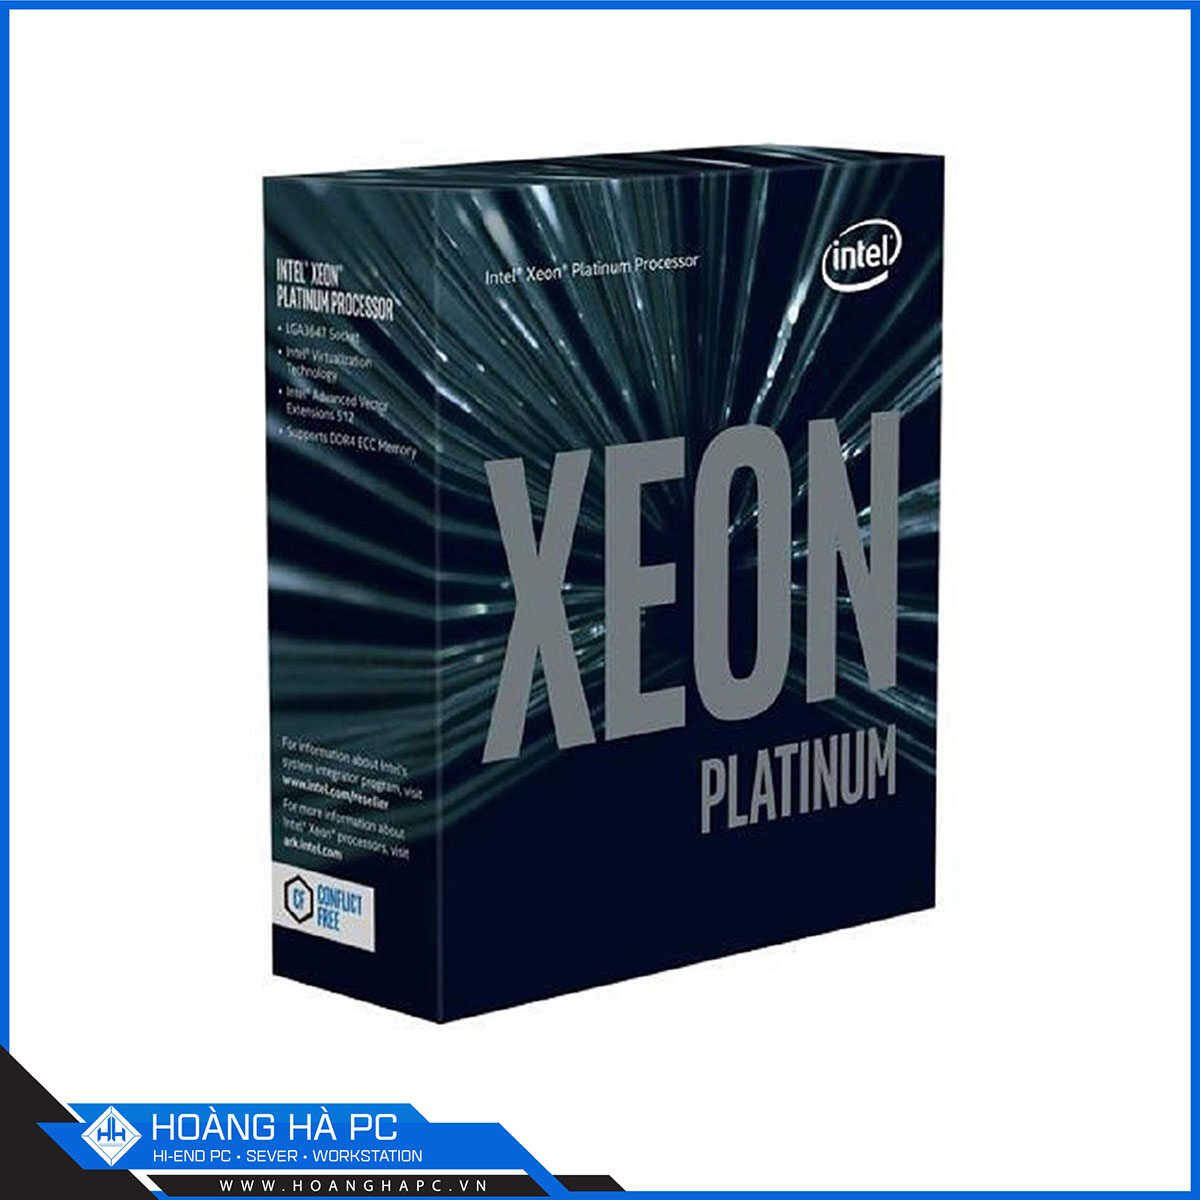 CPU Intel Xeon Platinum 8168